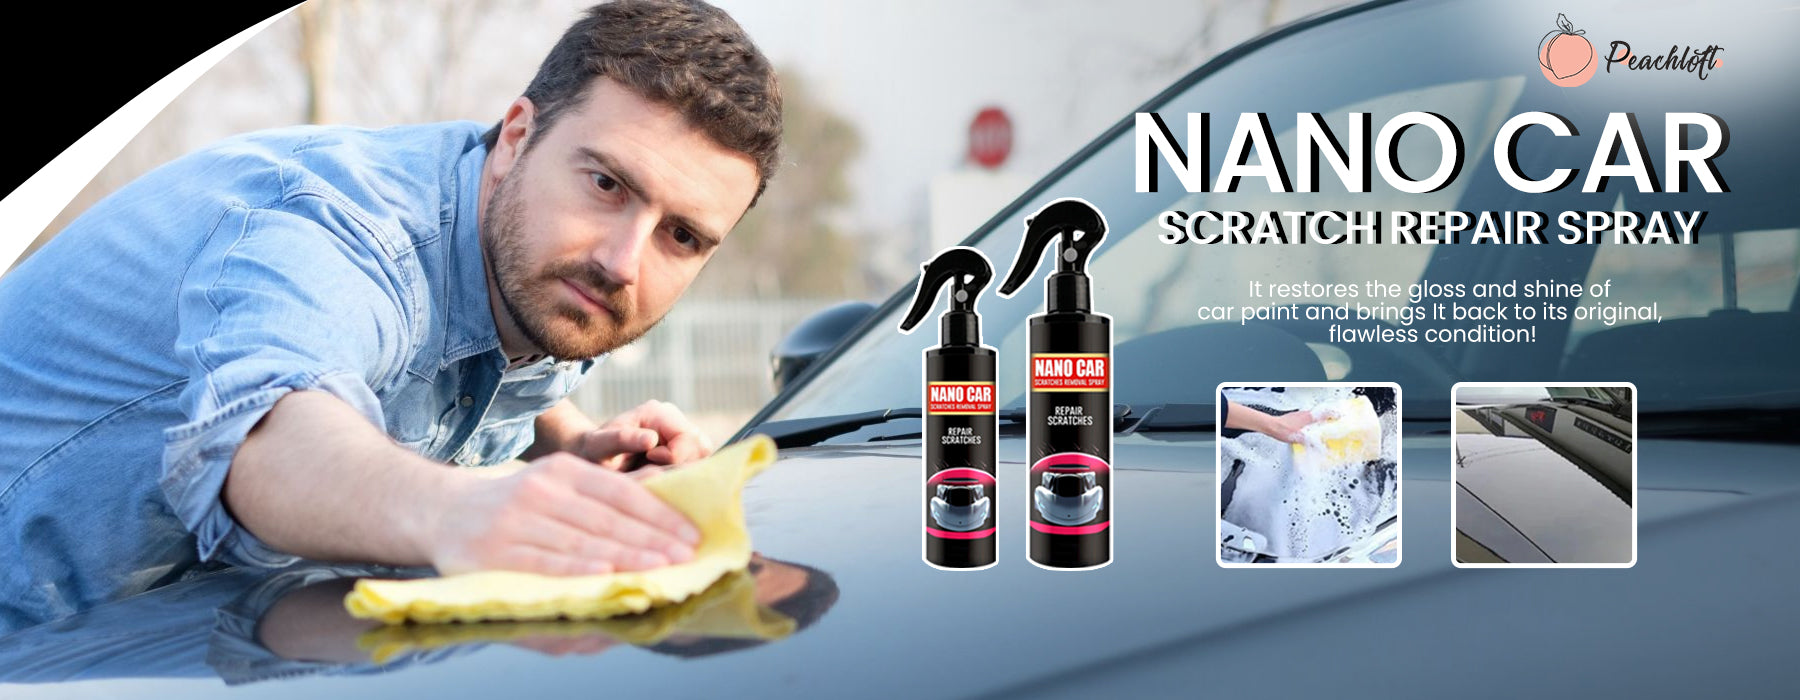  Peachloft Nano Car Scratch Repair Spray, P40 Car Scratch Quick  Repair Nano Spray, Nano Repair Spray for Cars, Nano Car Scratch Repair  Spray, Fast Repair Scratches (1pcs) : Automotive